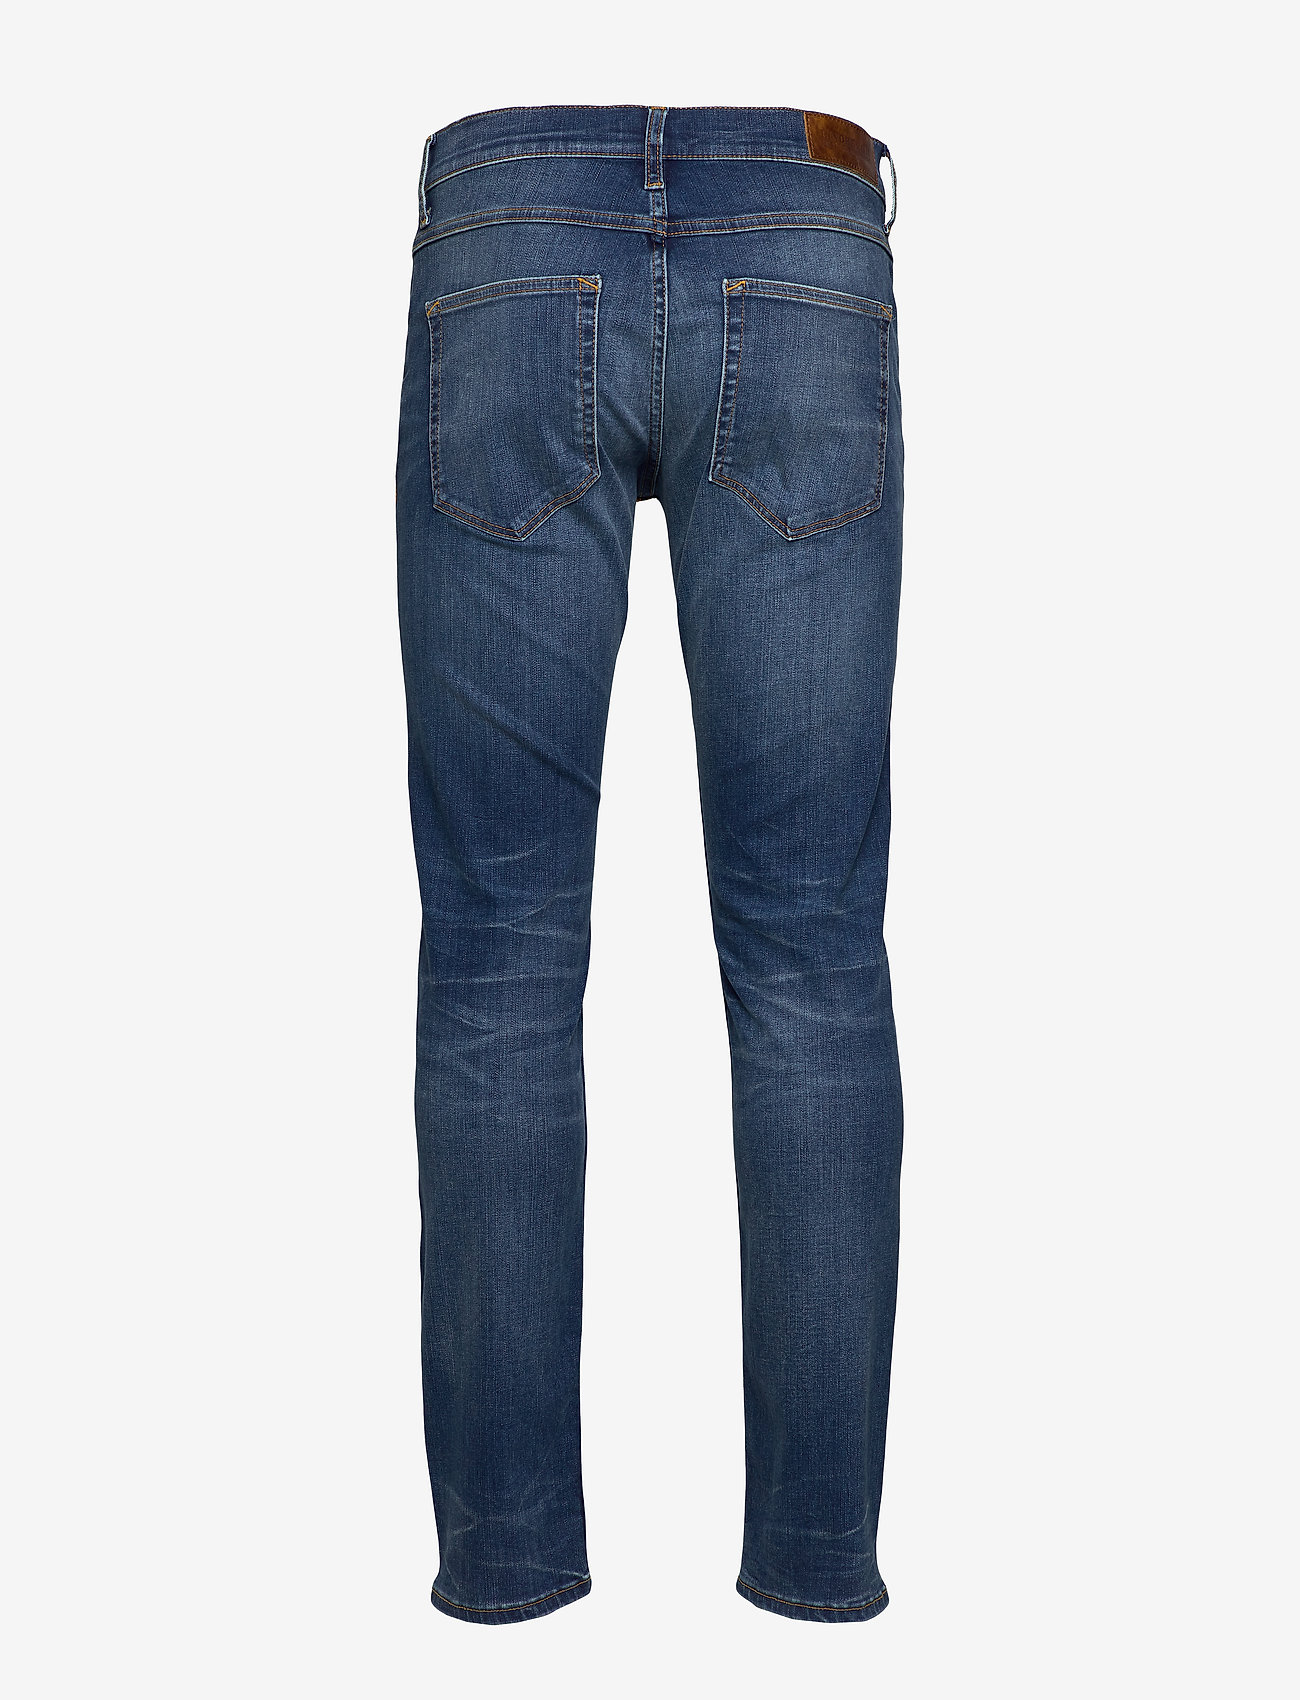 Lindbergh - Superflex jeans original blue - Tap - tapered jeans - original blue - 1